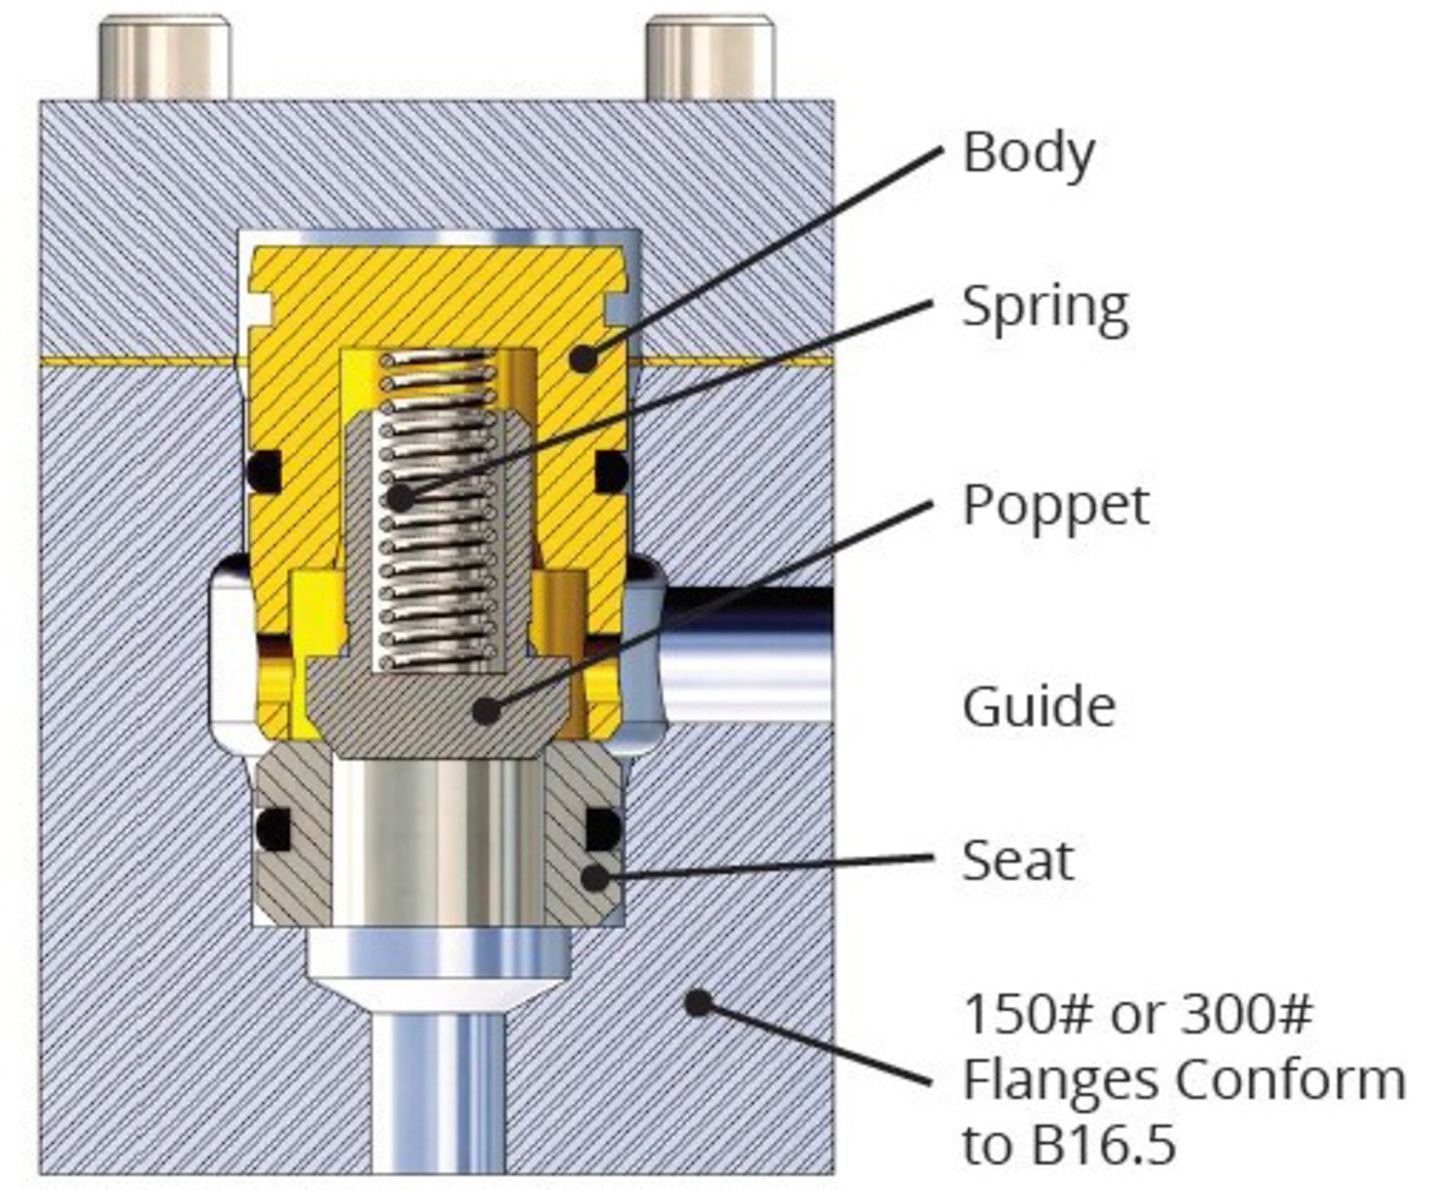 Highpressure water valve selection & maintenance, Part 1 PI Process